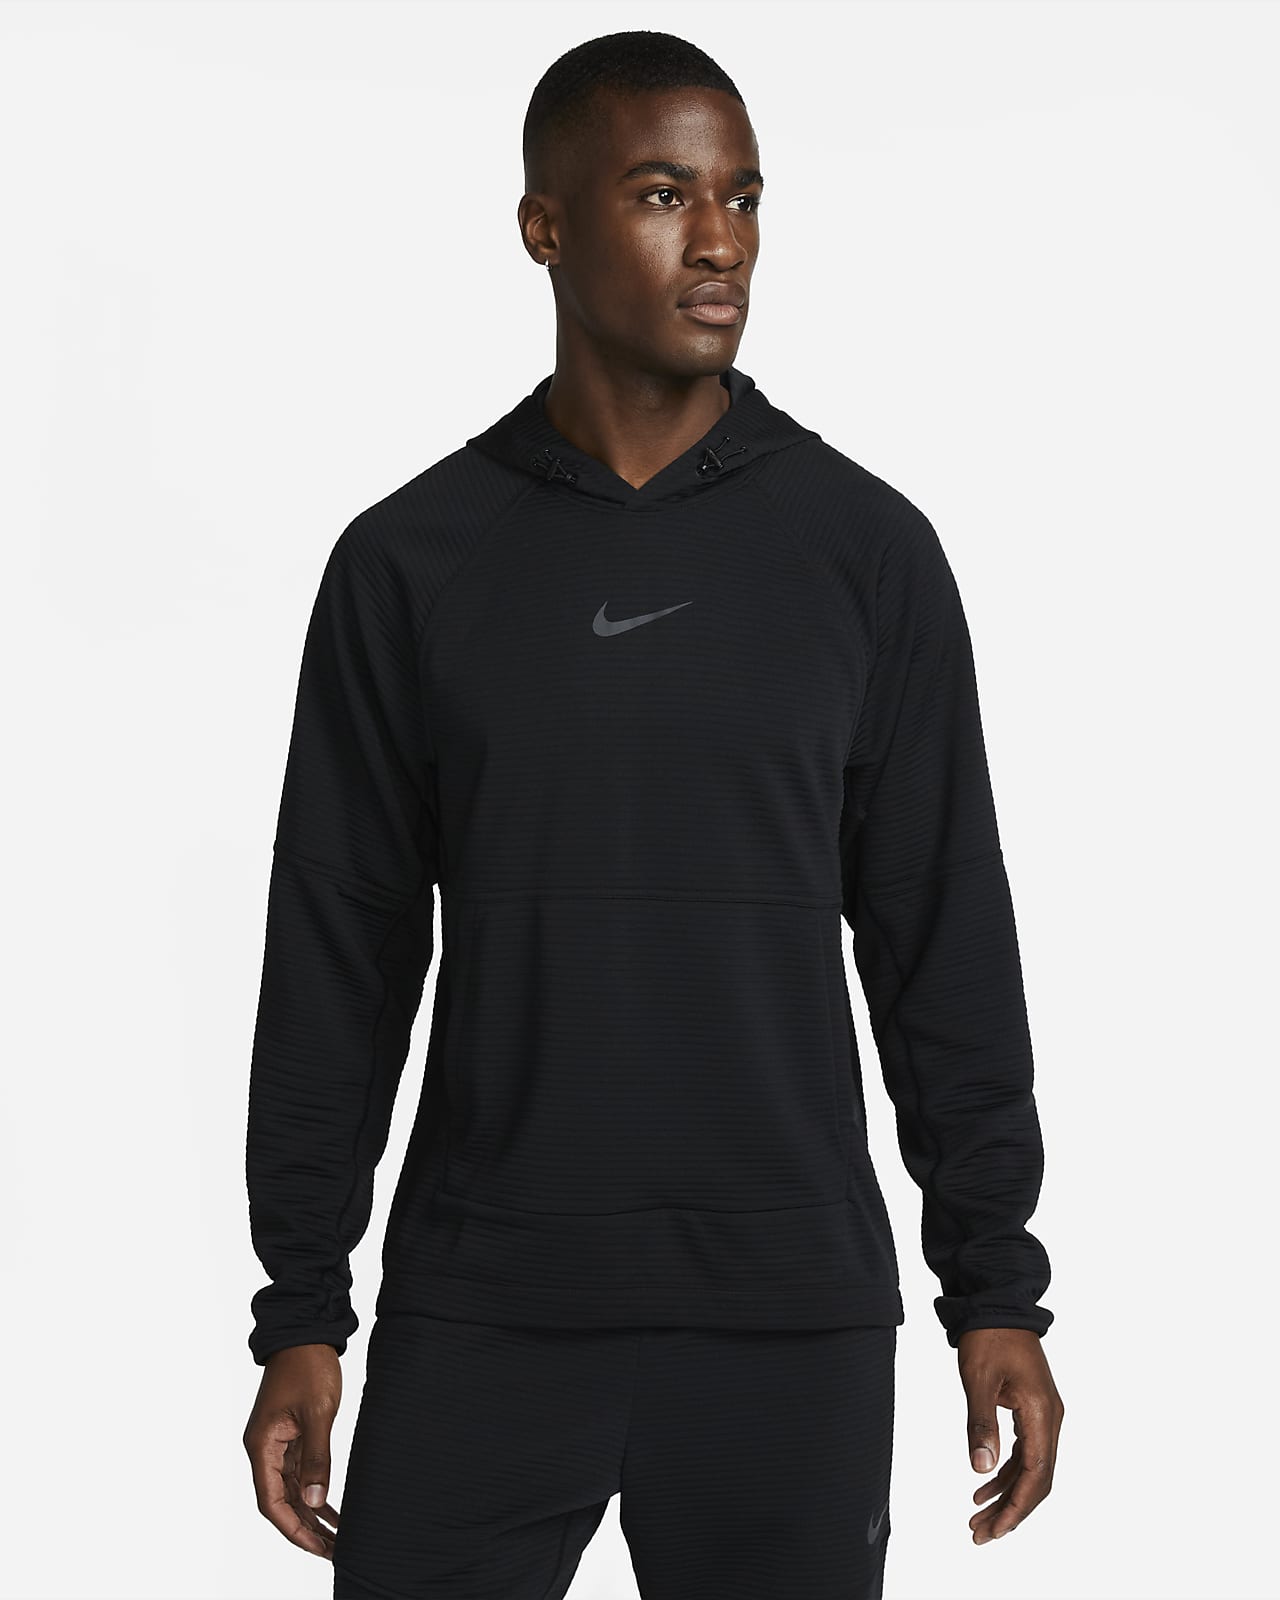 Rubicundo Acelerar Mirar atrás Nike Pro Dri-FIT Fleece-Fitness-Pullover für Herren. Nike LU